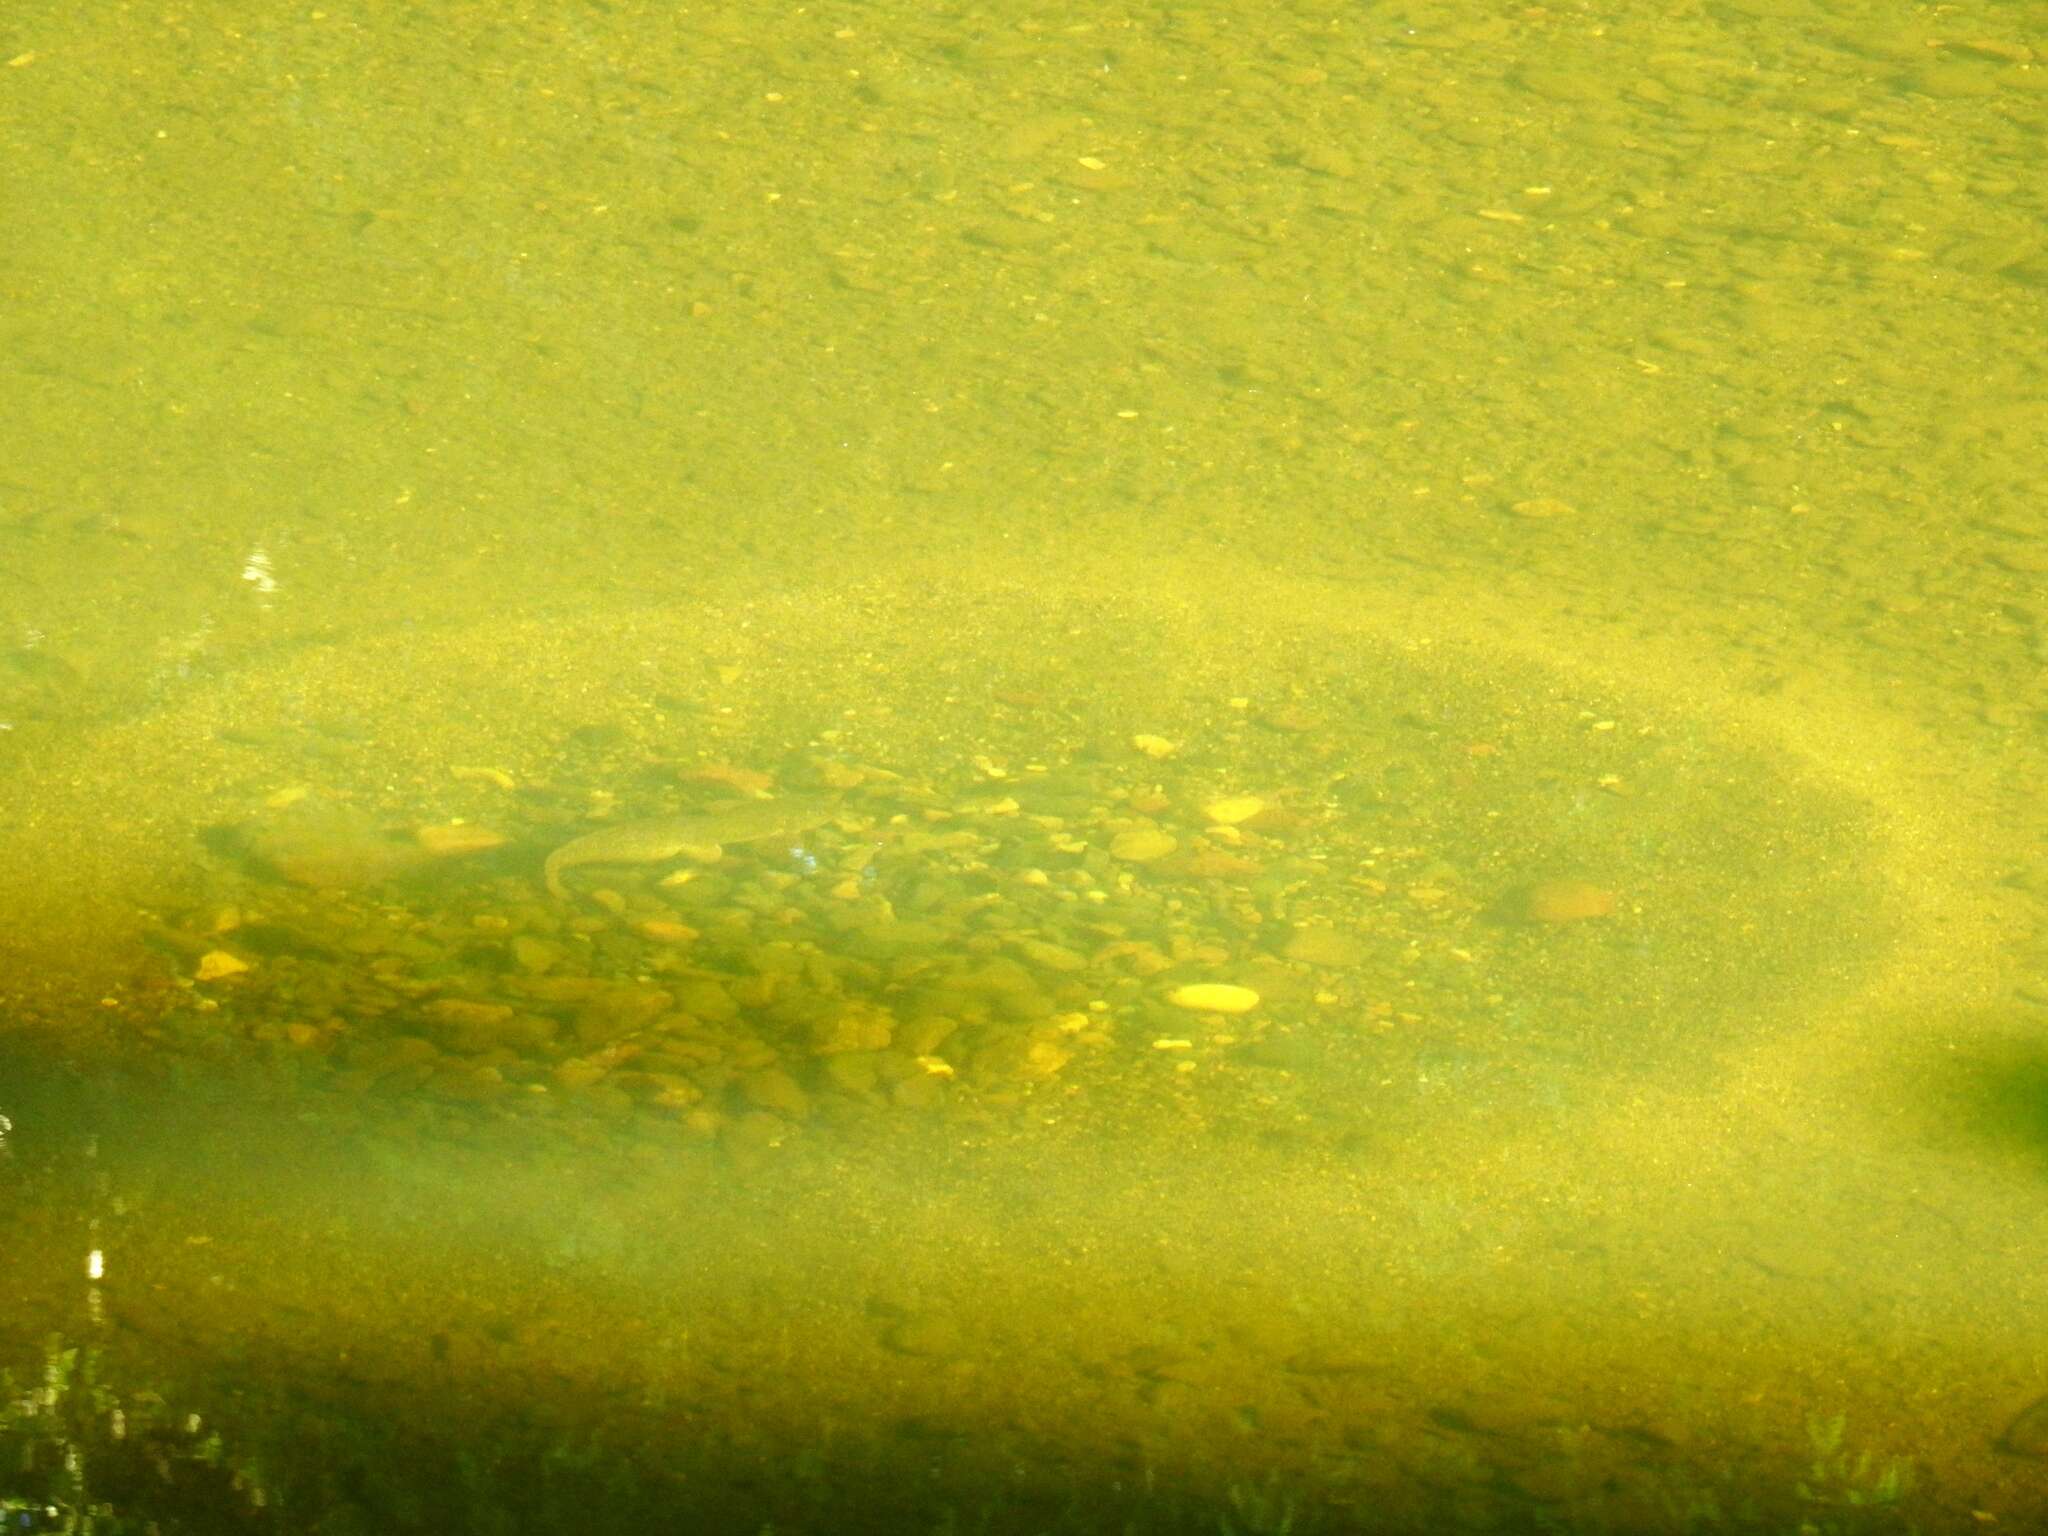 Image of Eel-tailed catfish